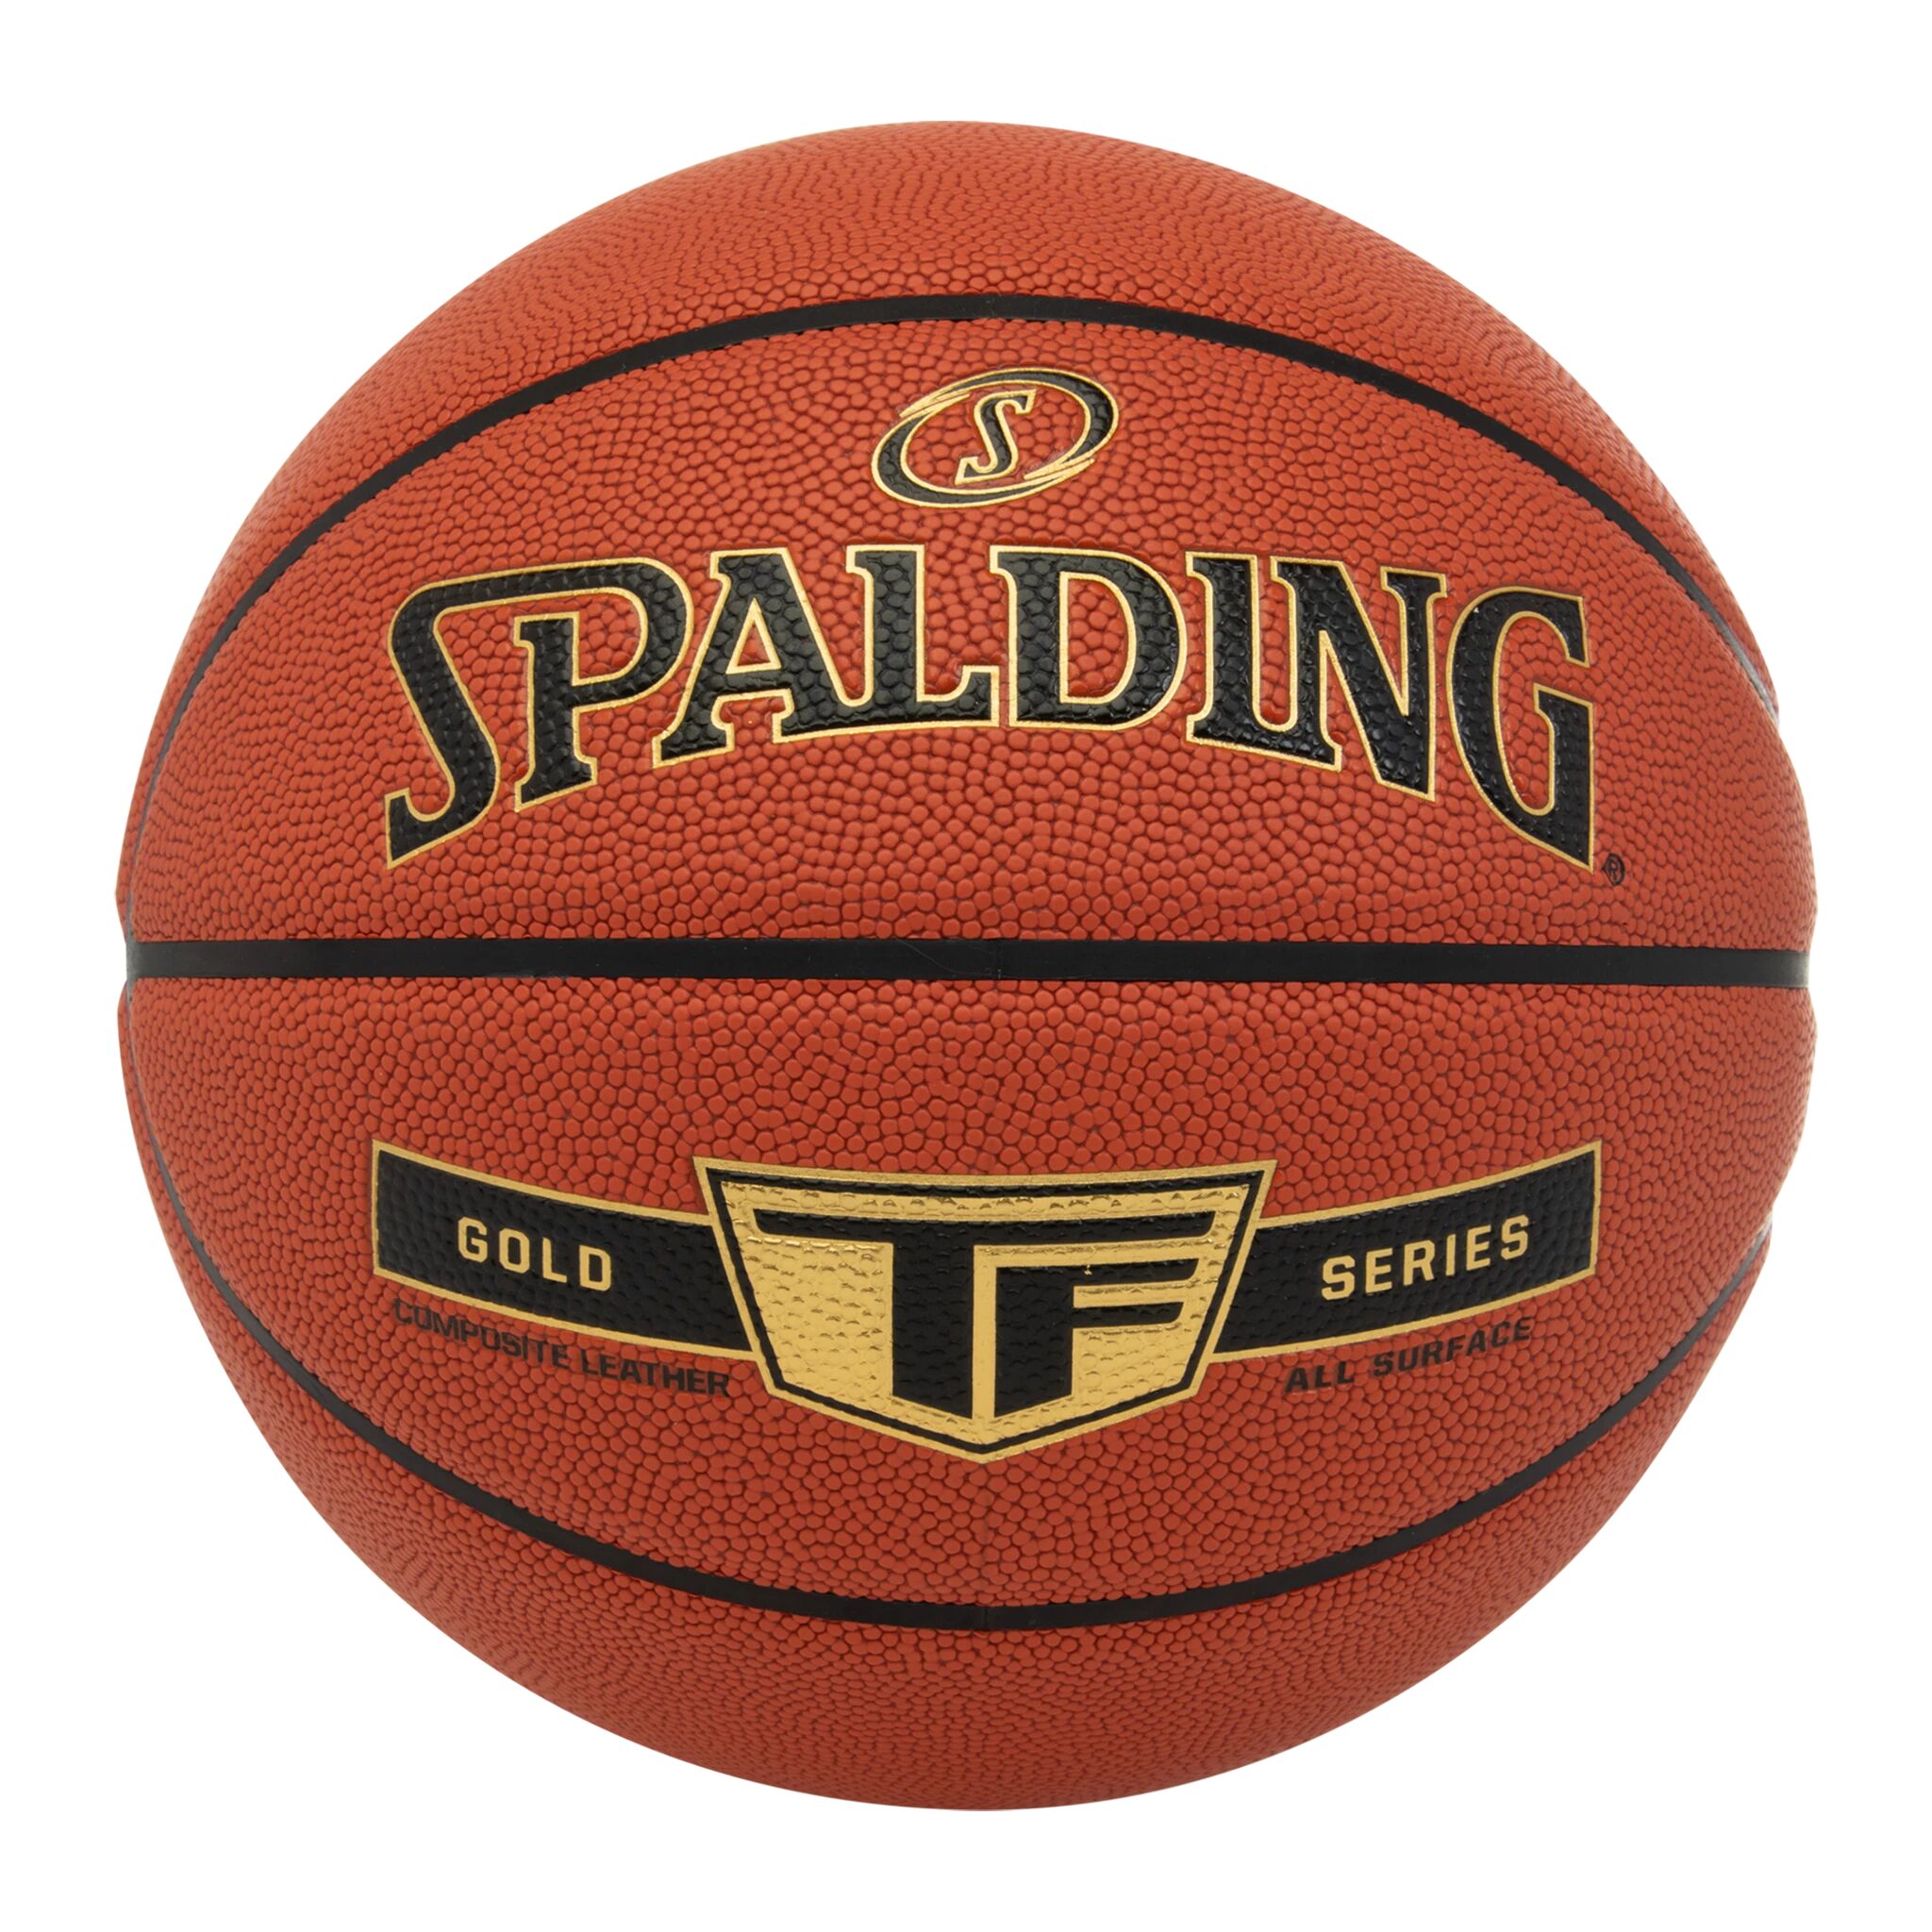 Spalding TF Gold Composite Basketball, basketball 7 Orange